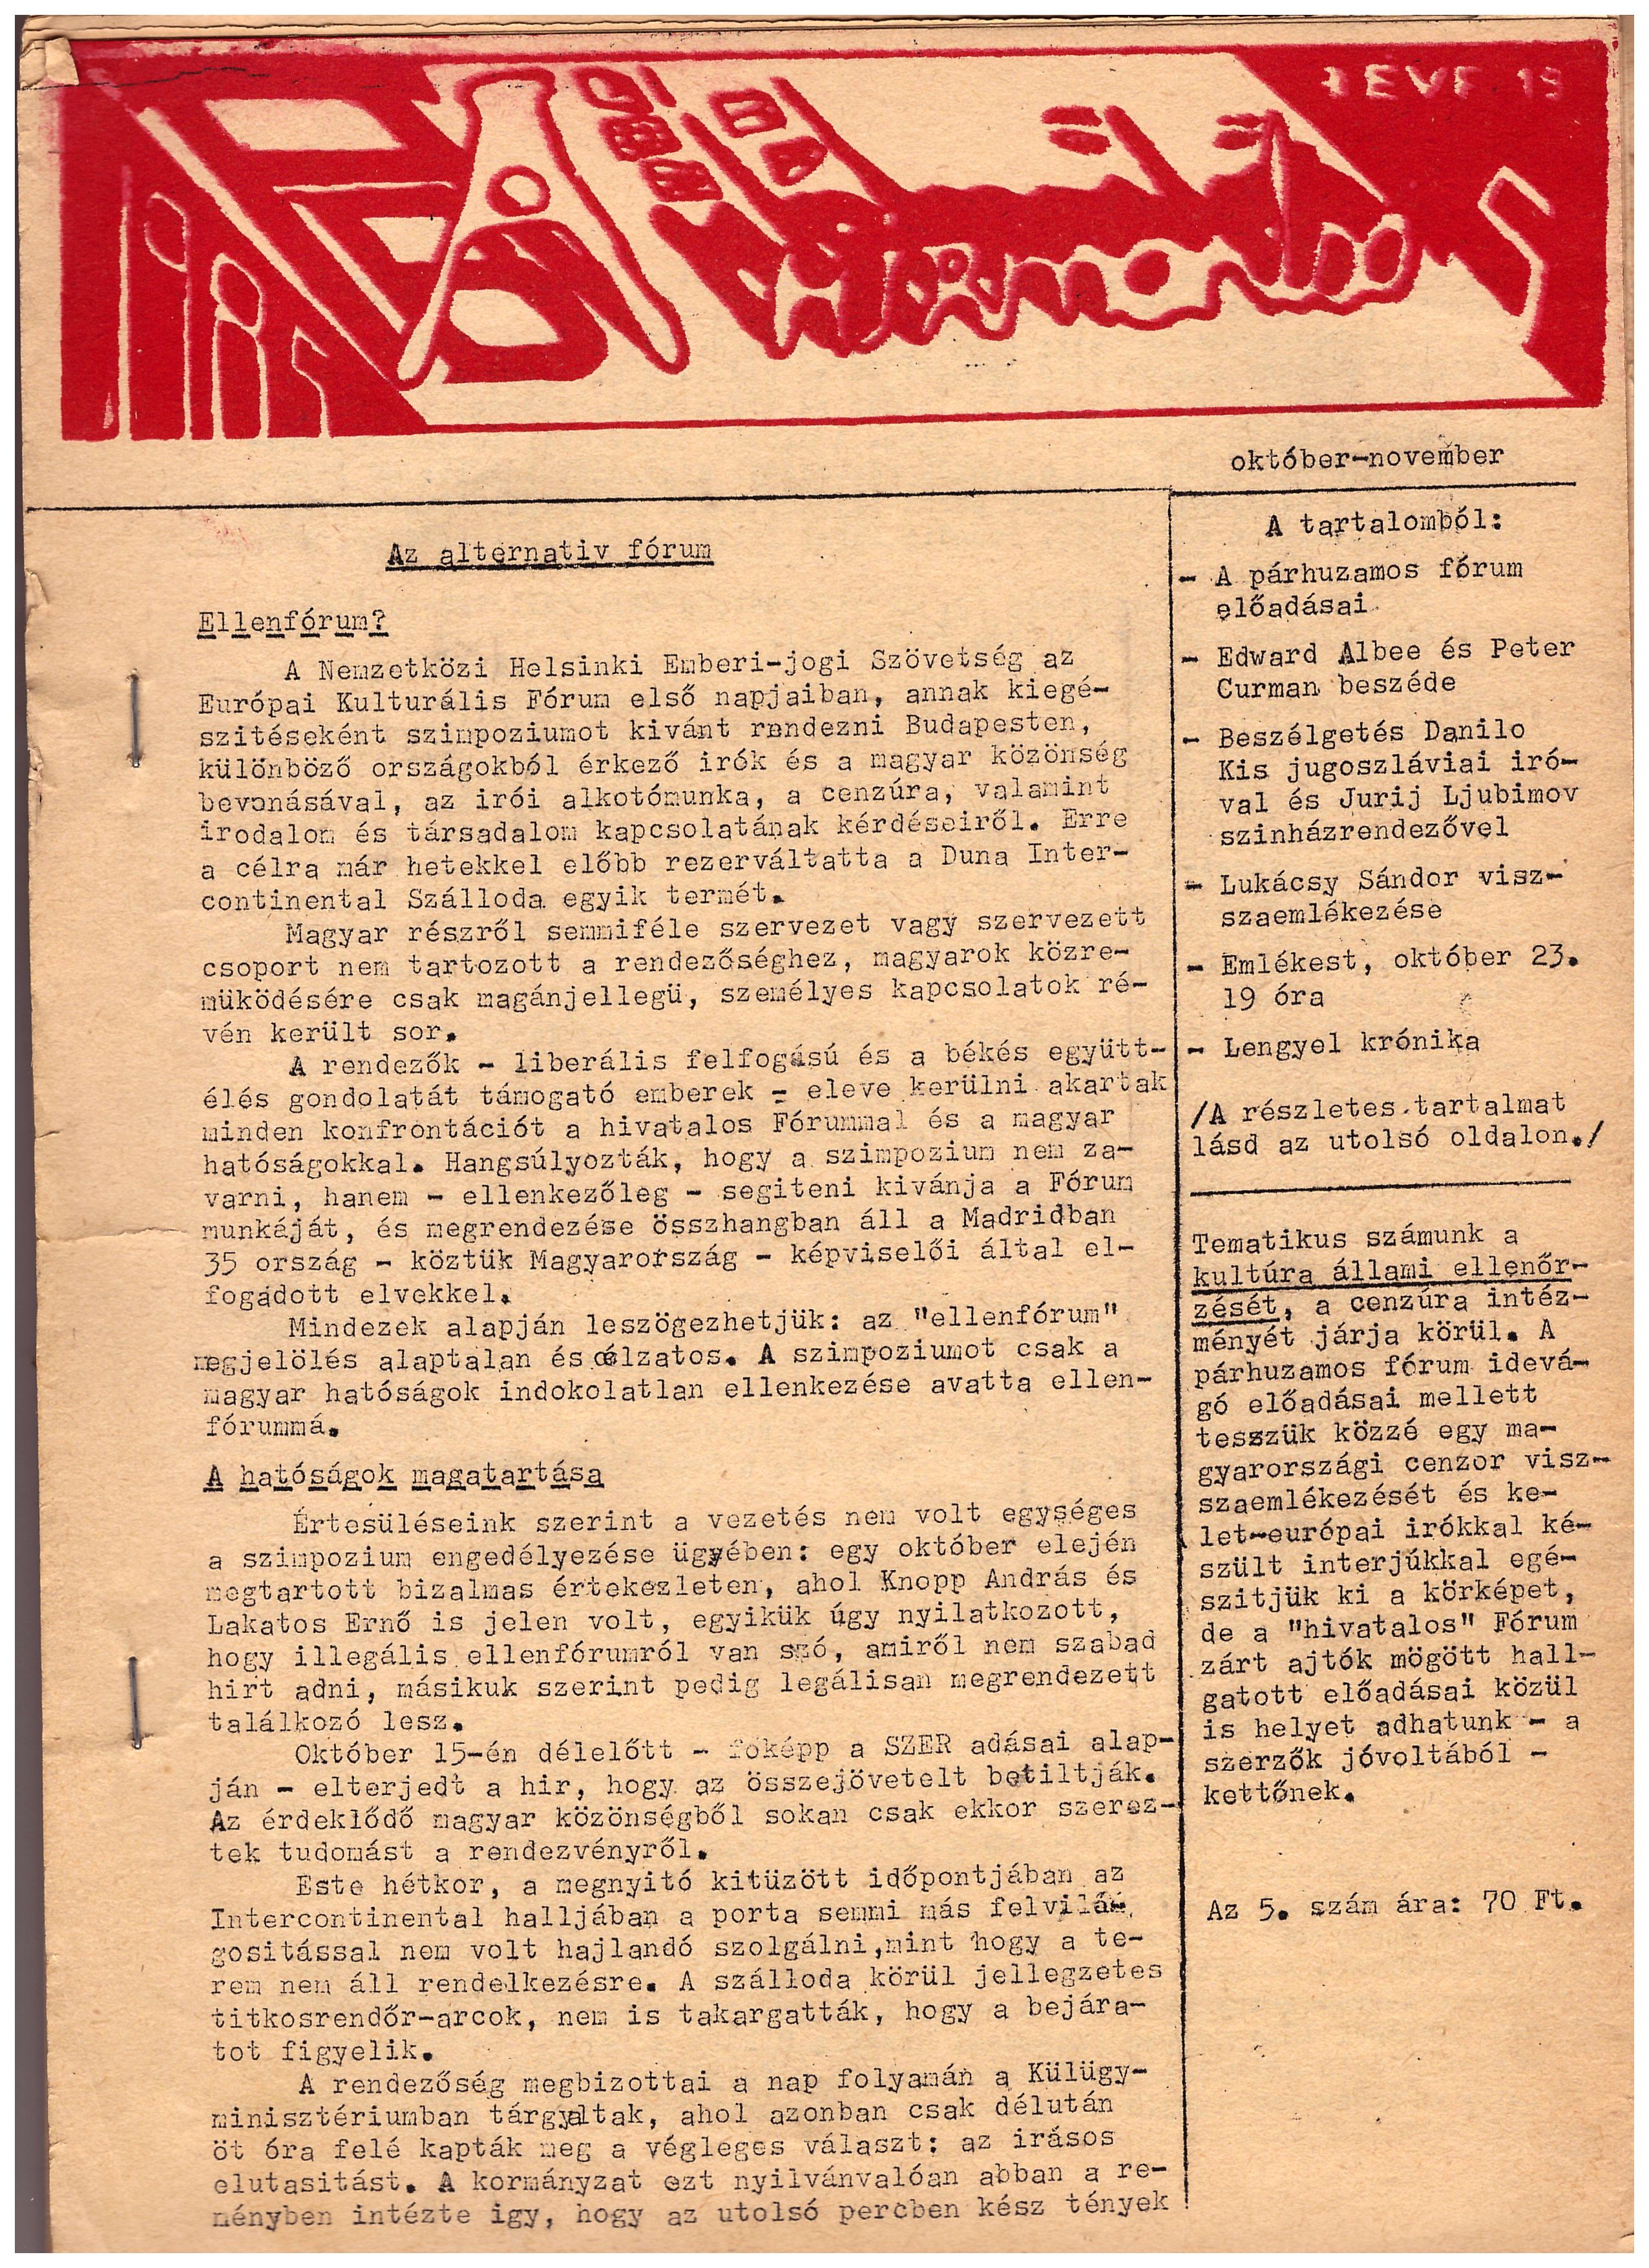 Special issue of Hungarian samizdat paper Hírmondó, 5/1985